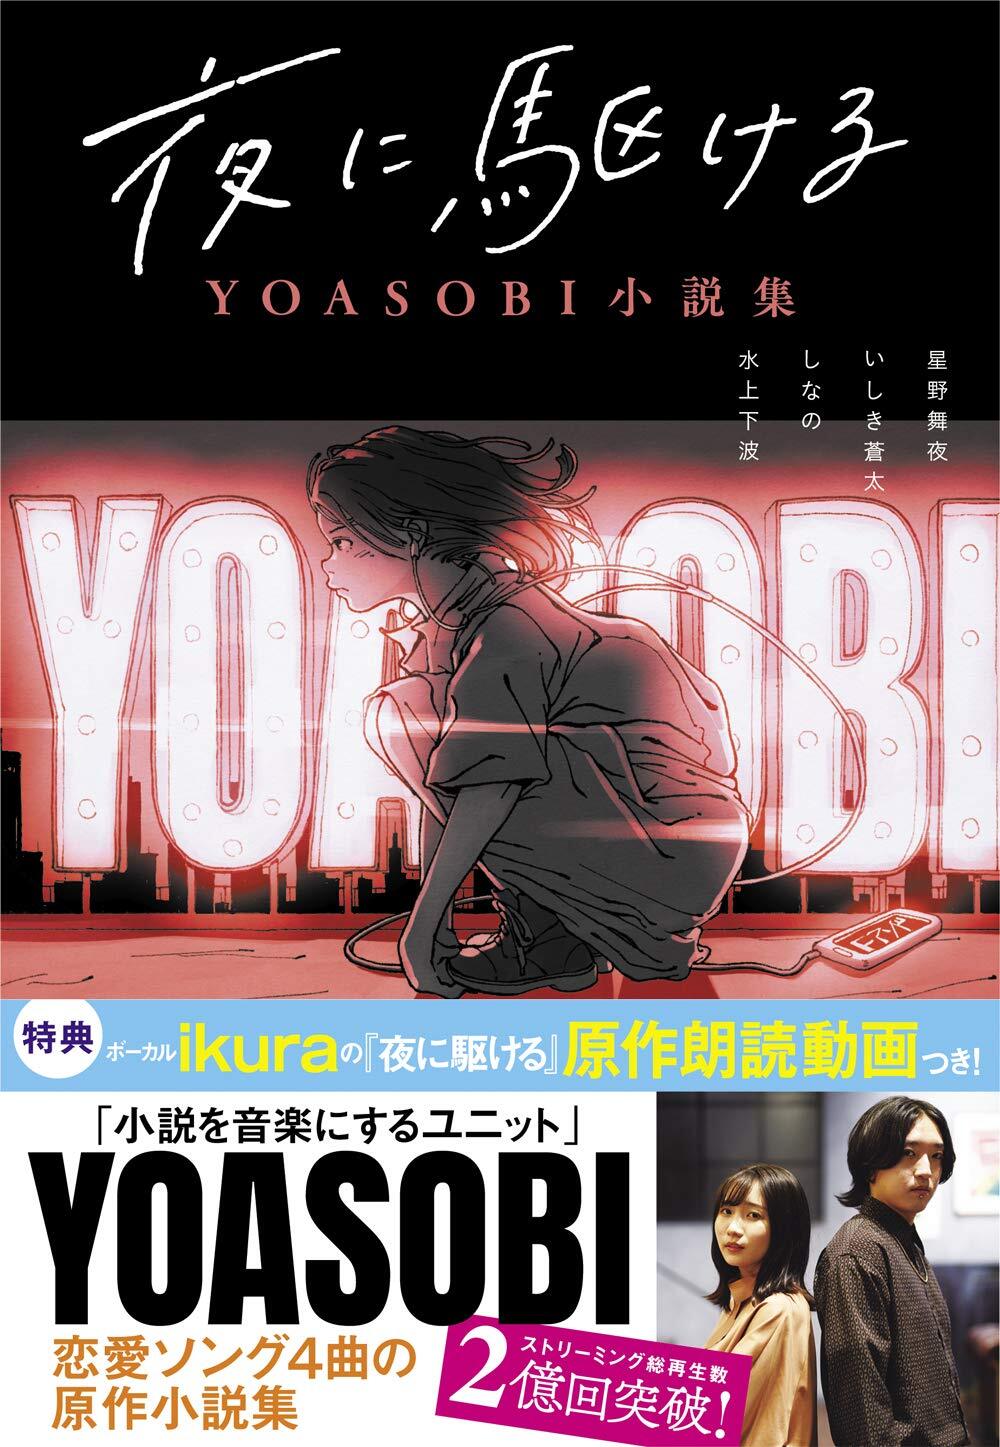 Nhk紅白 最大の目玉 Yoasobi 再生数3億 透明感 ホラー 音楽の未来 日刊大衆